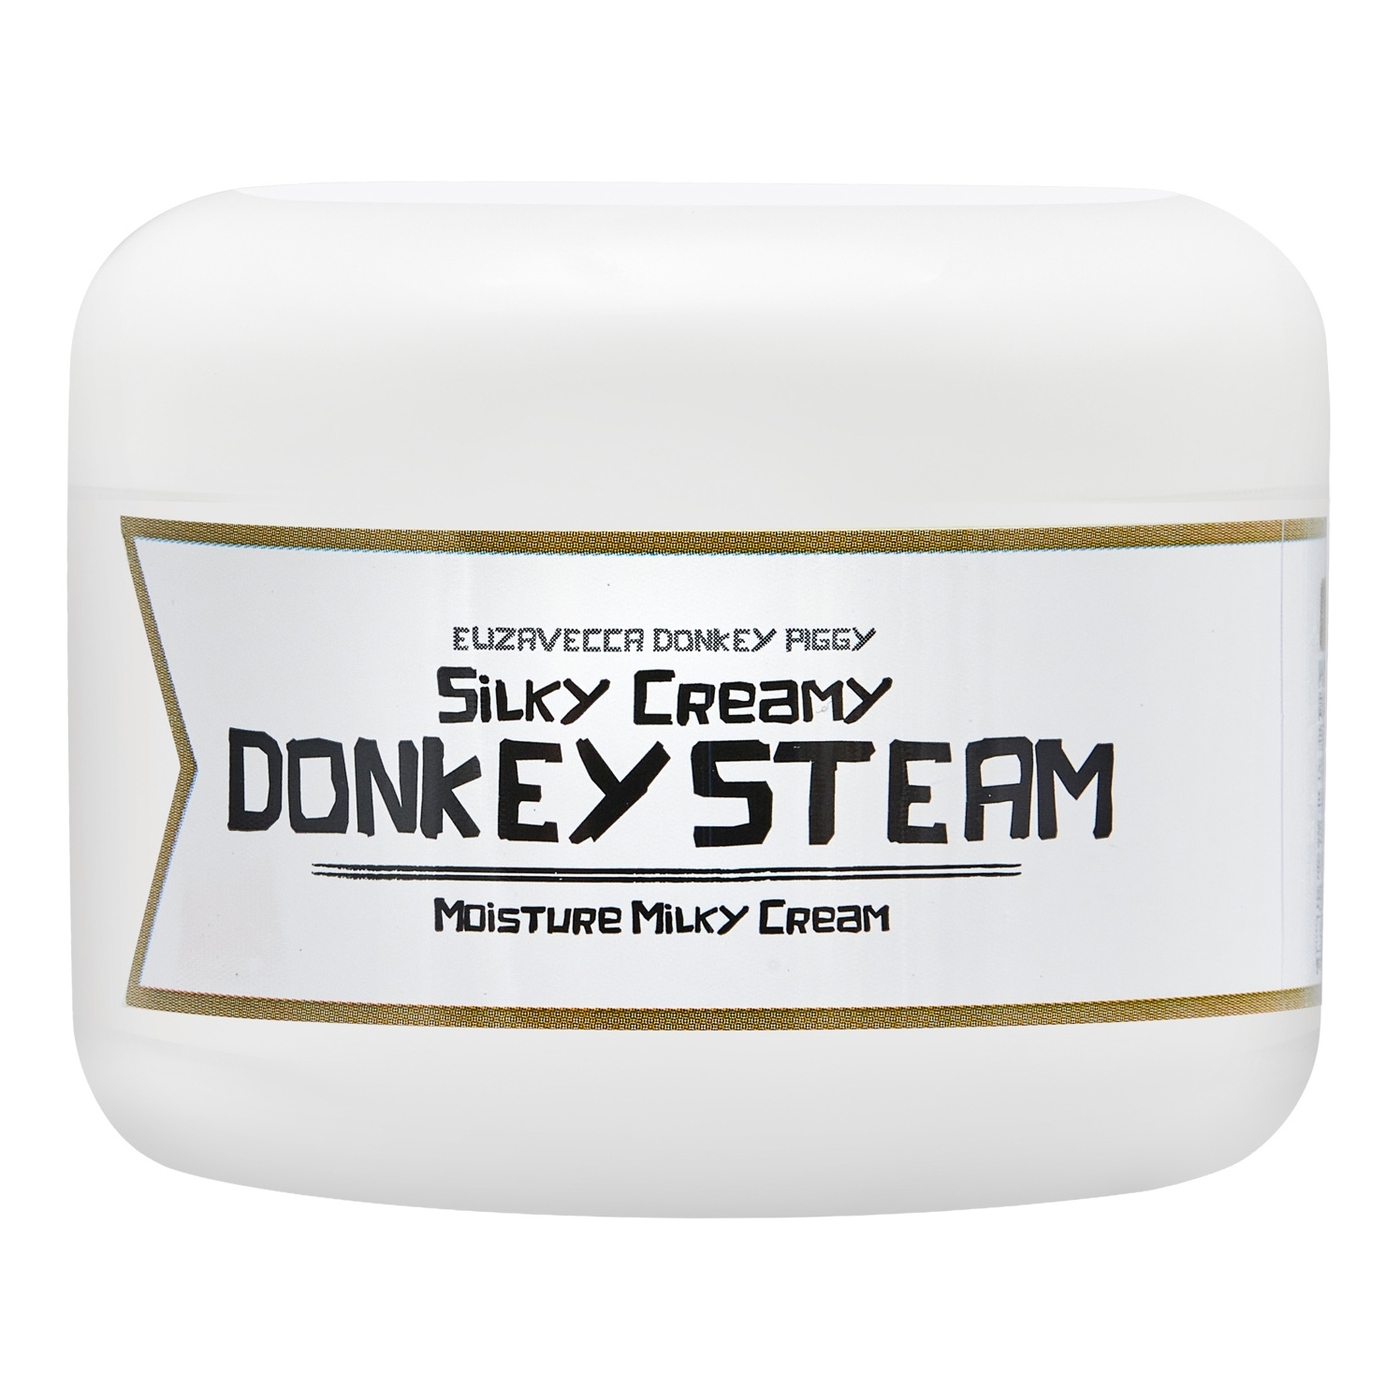 Silky cream donkey steam moisture milky cream фото 29